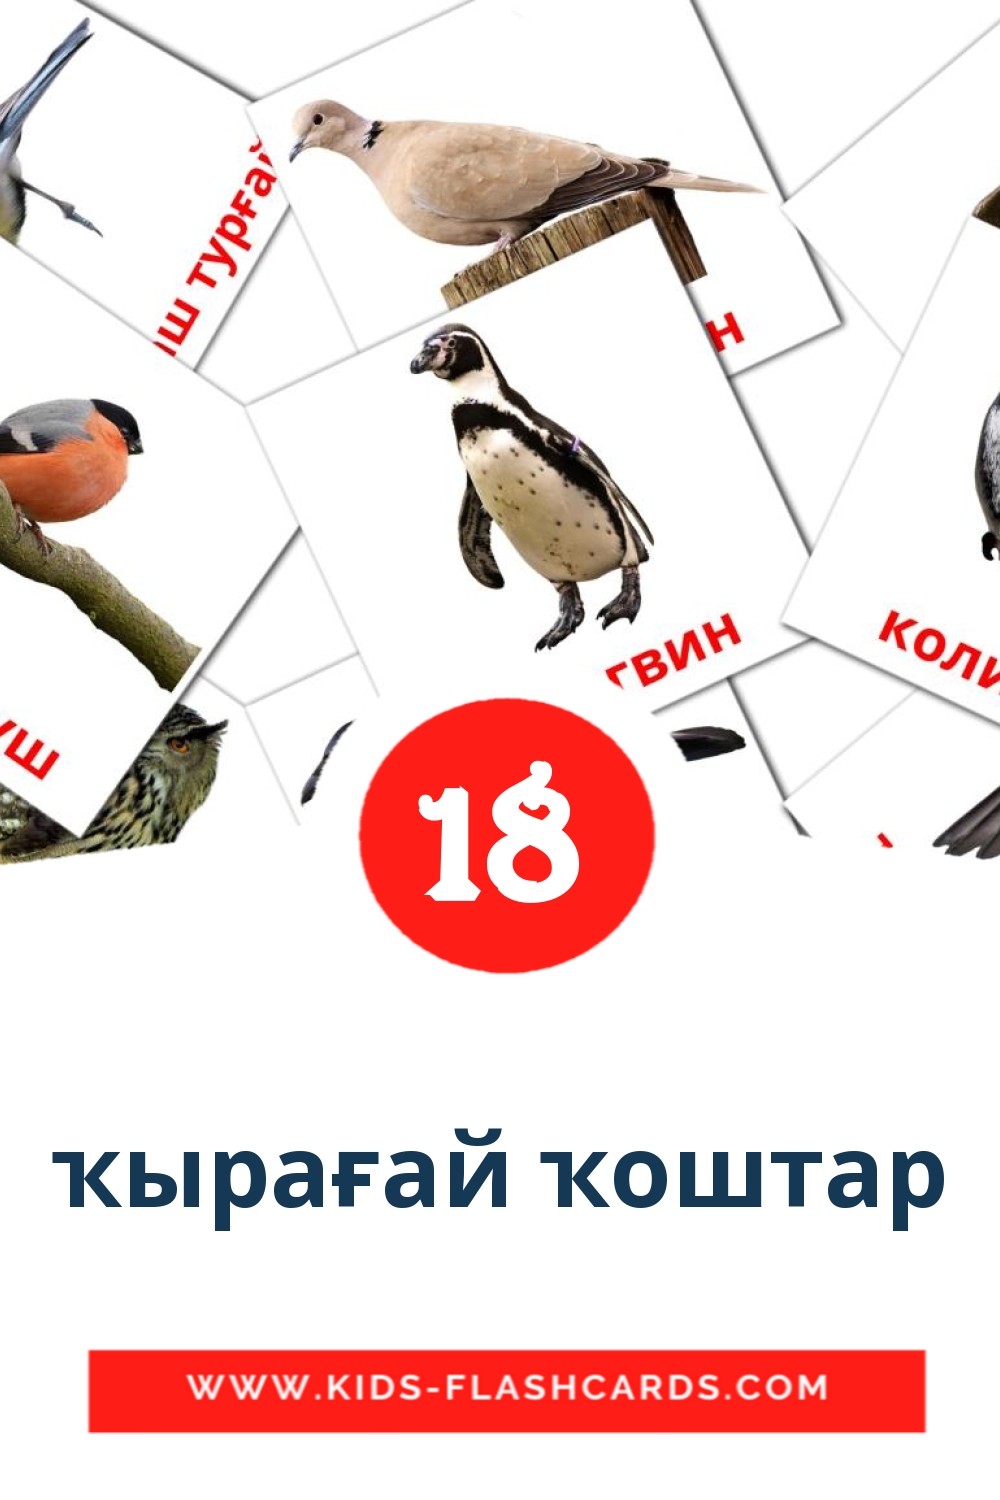 18 carte illustrate di ҡырағай ҡоштар per la scuola materna in bashkir